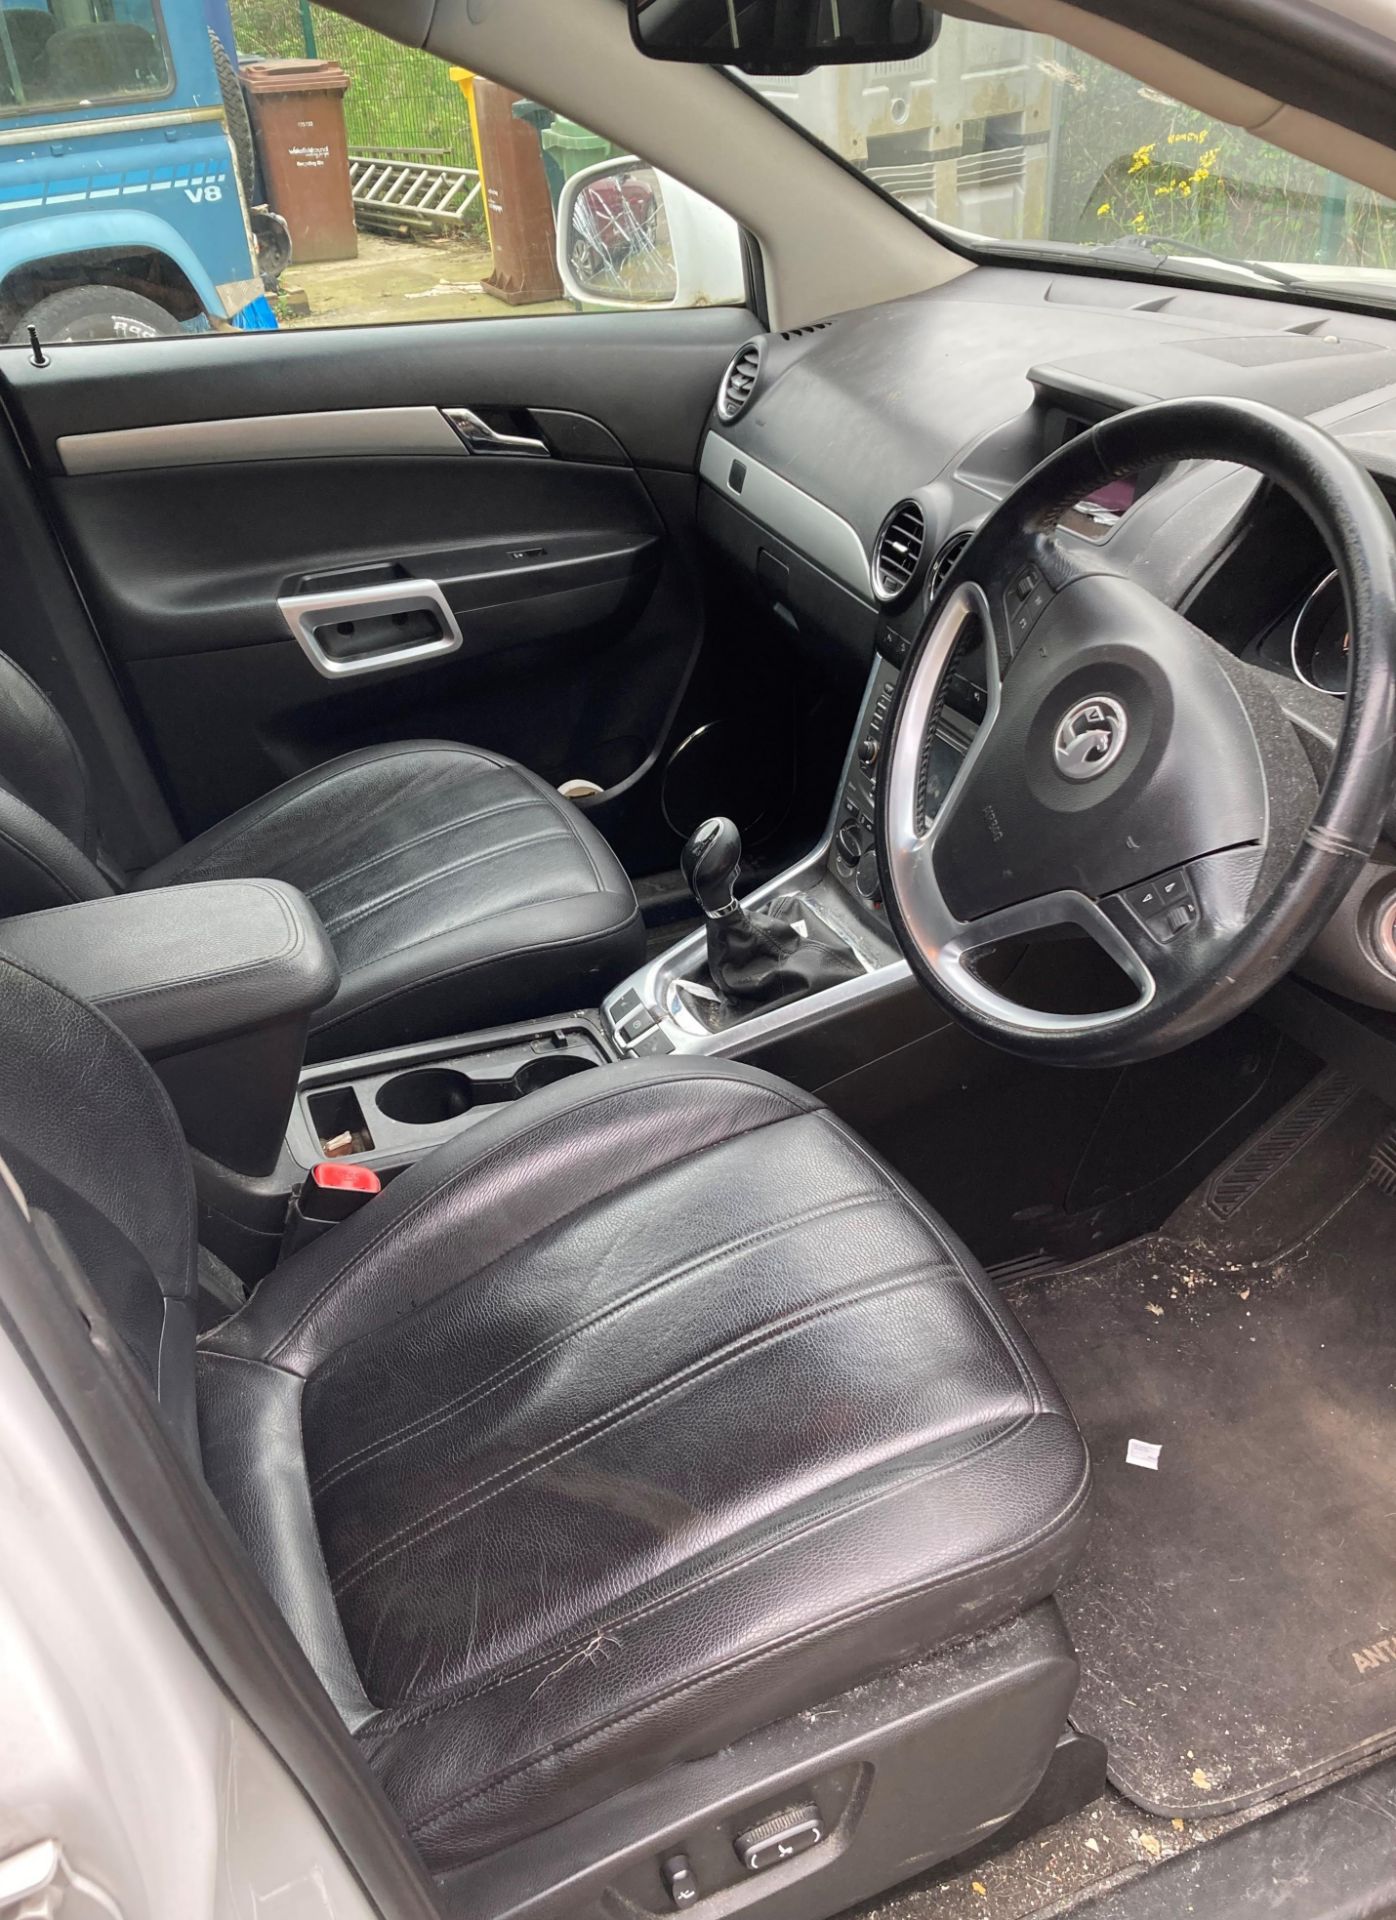 VAUXHALL ANTARA SE TDCi 4X4 - Diesel - White - Black leather interior - Alloys. - Bild 7 aus 11